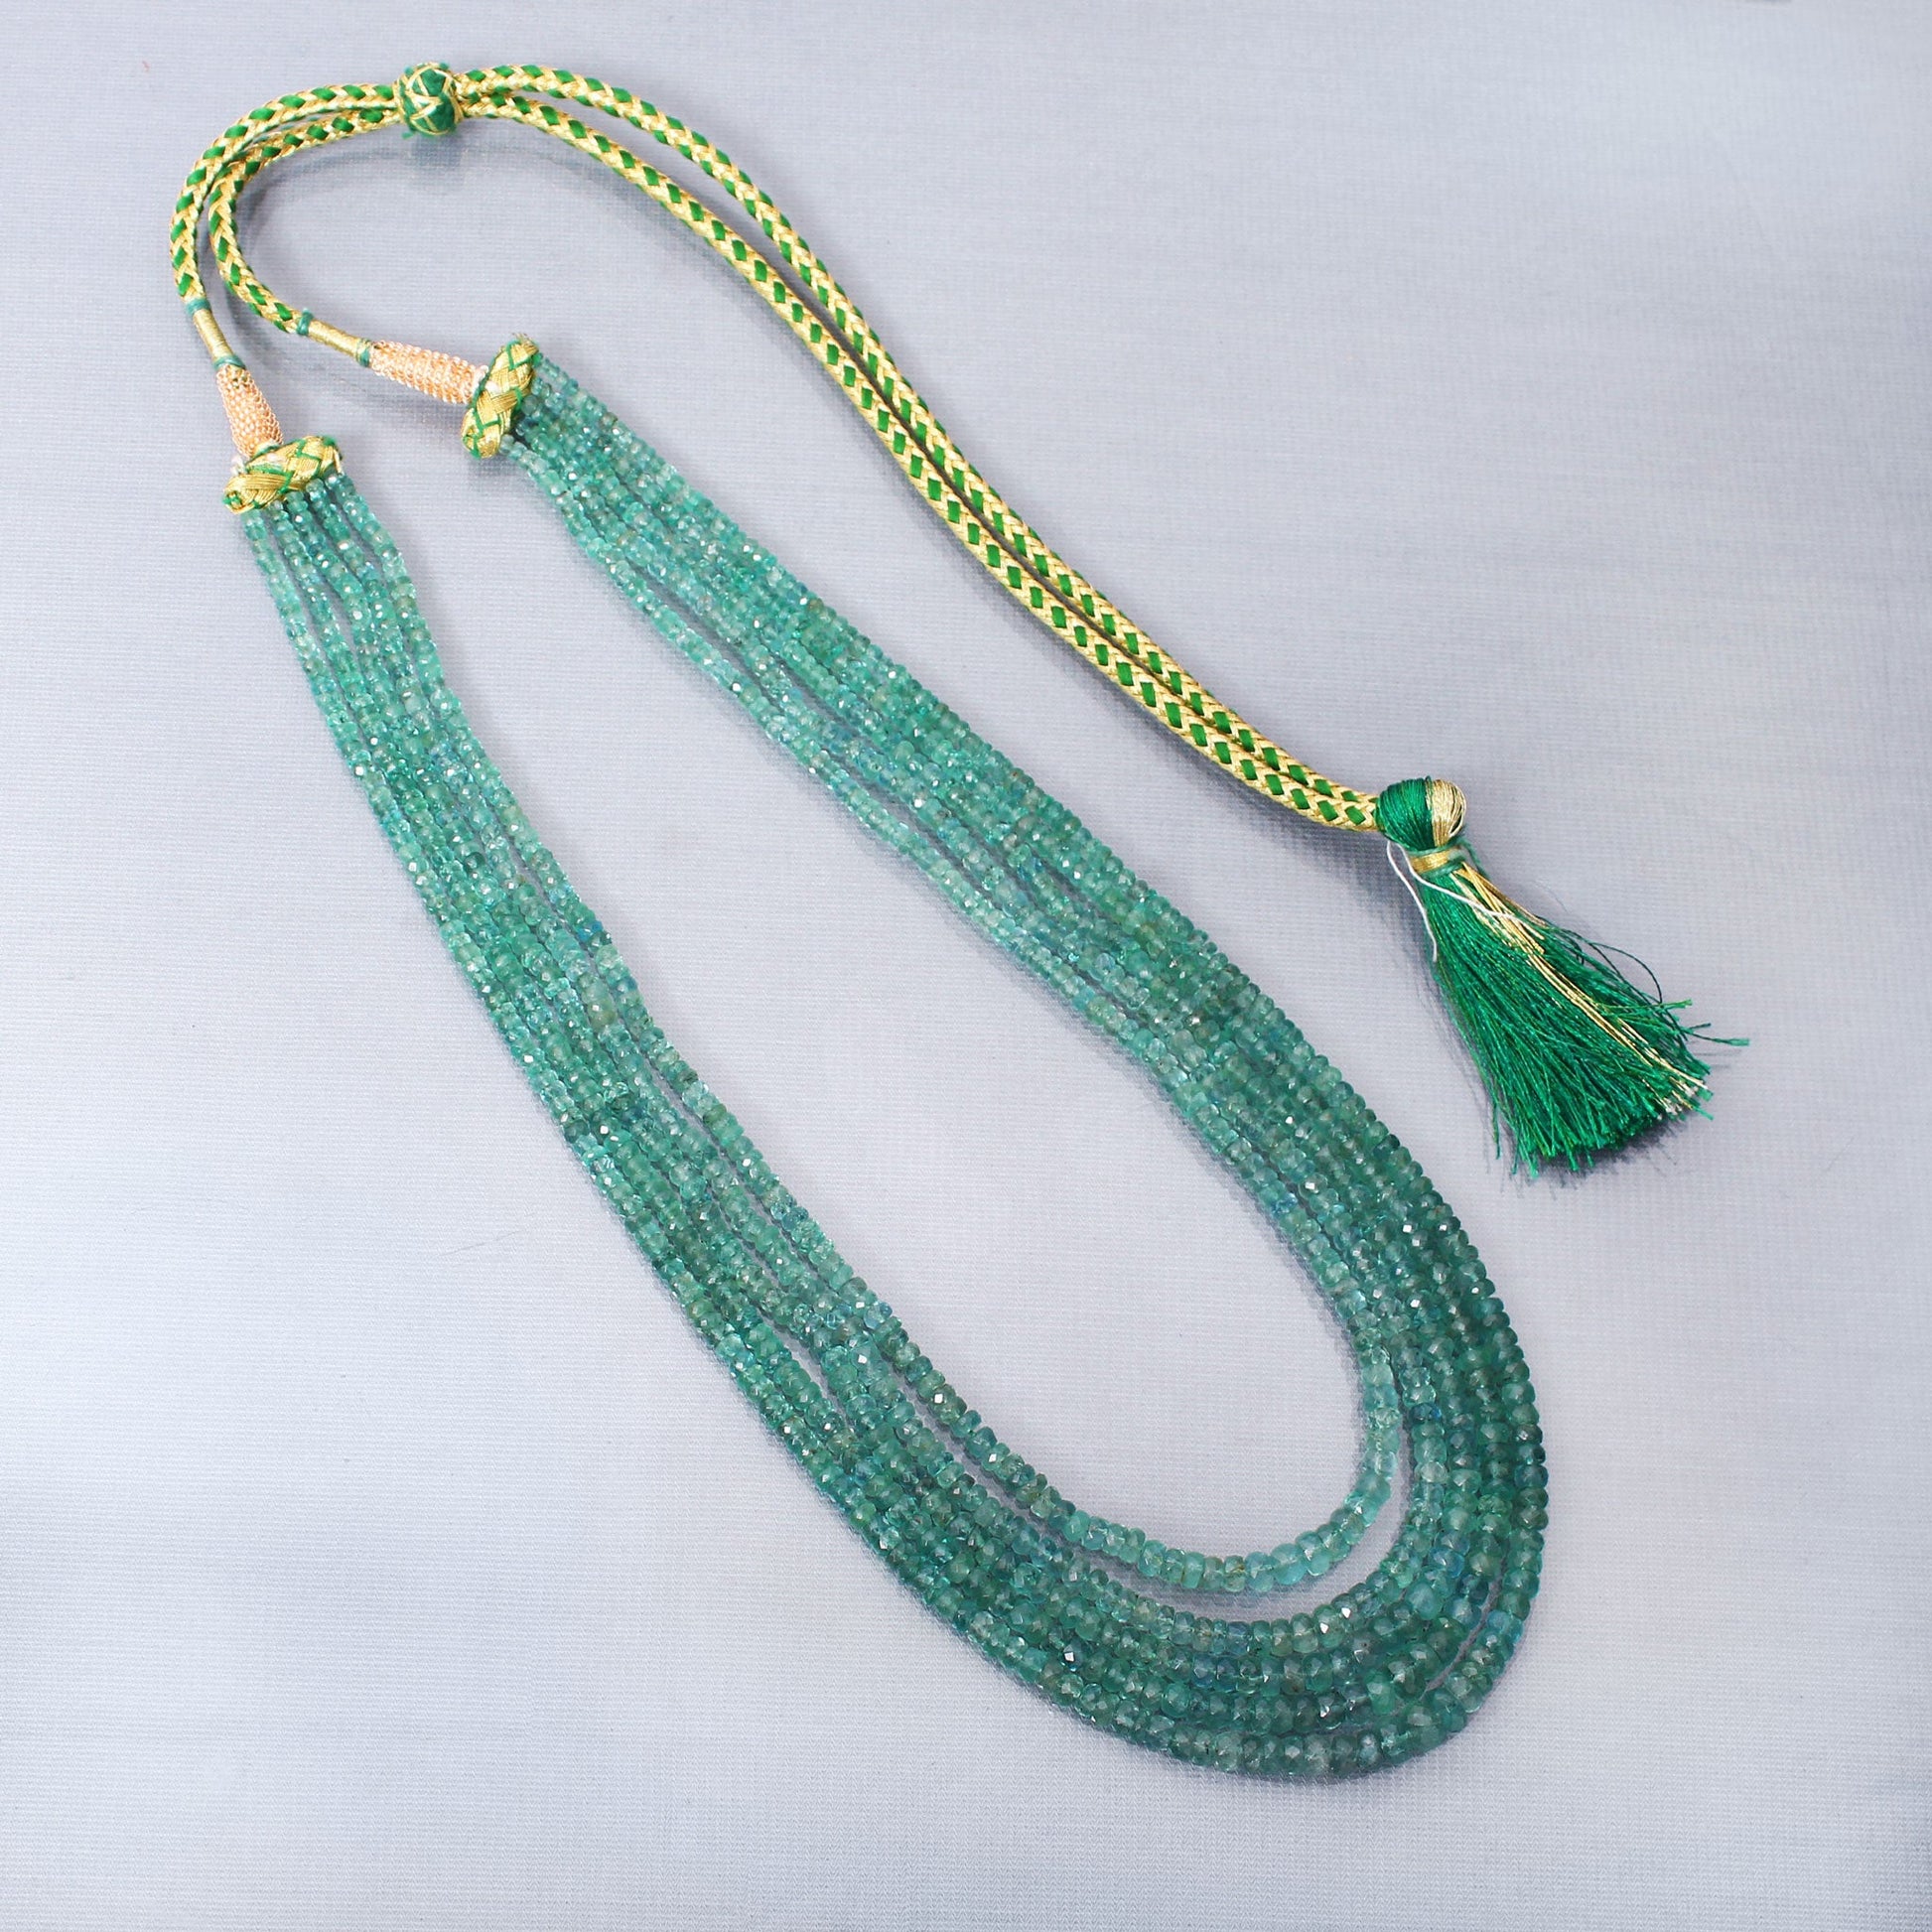 Premium Emerald Sarafa Necklace - 5 Layered Gemstone Statement Jewelry For Occasion GemsRush